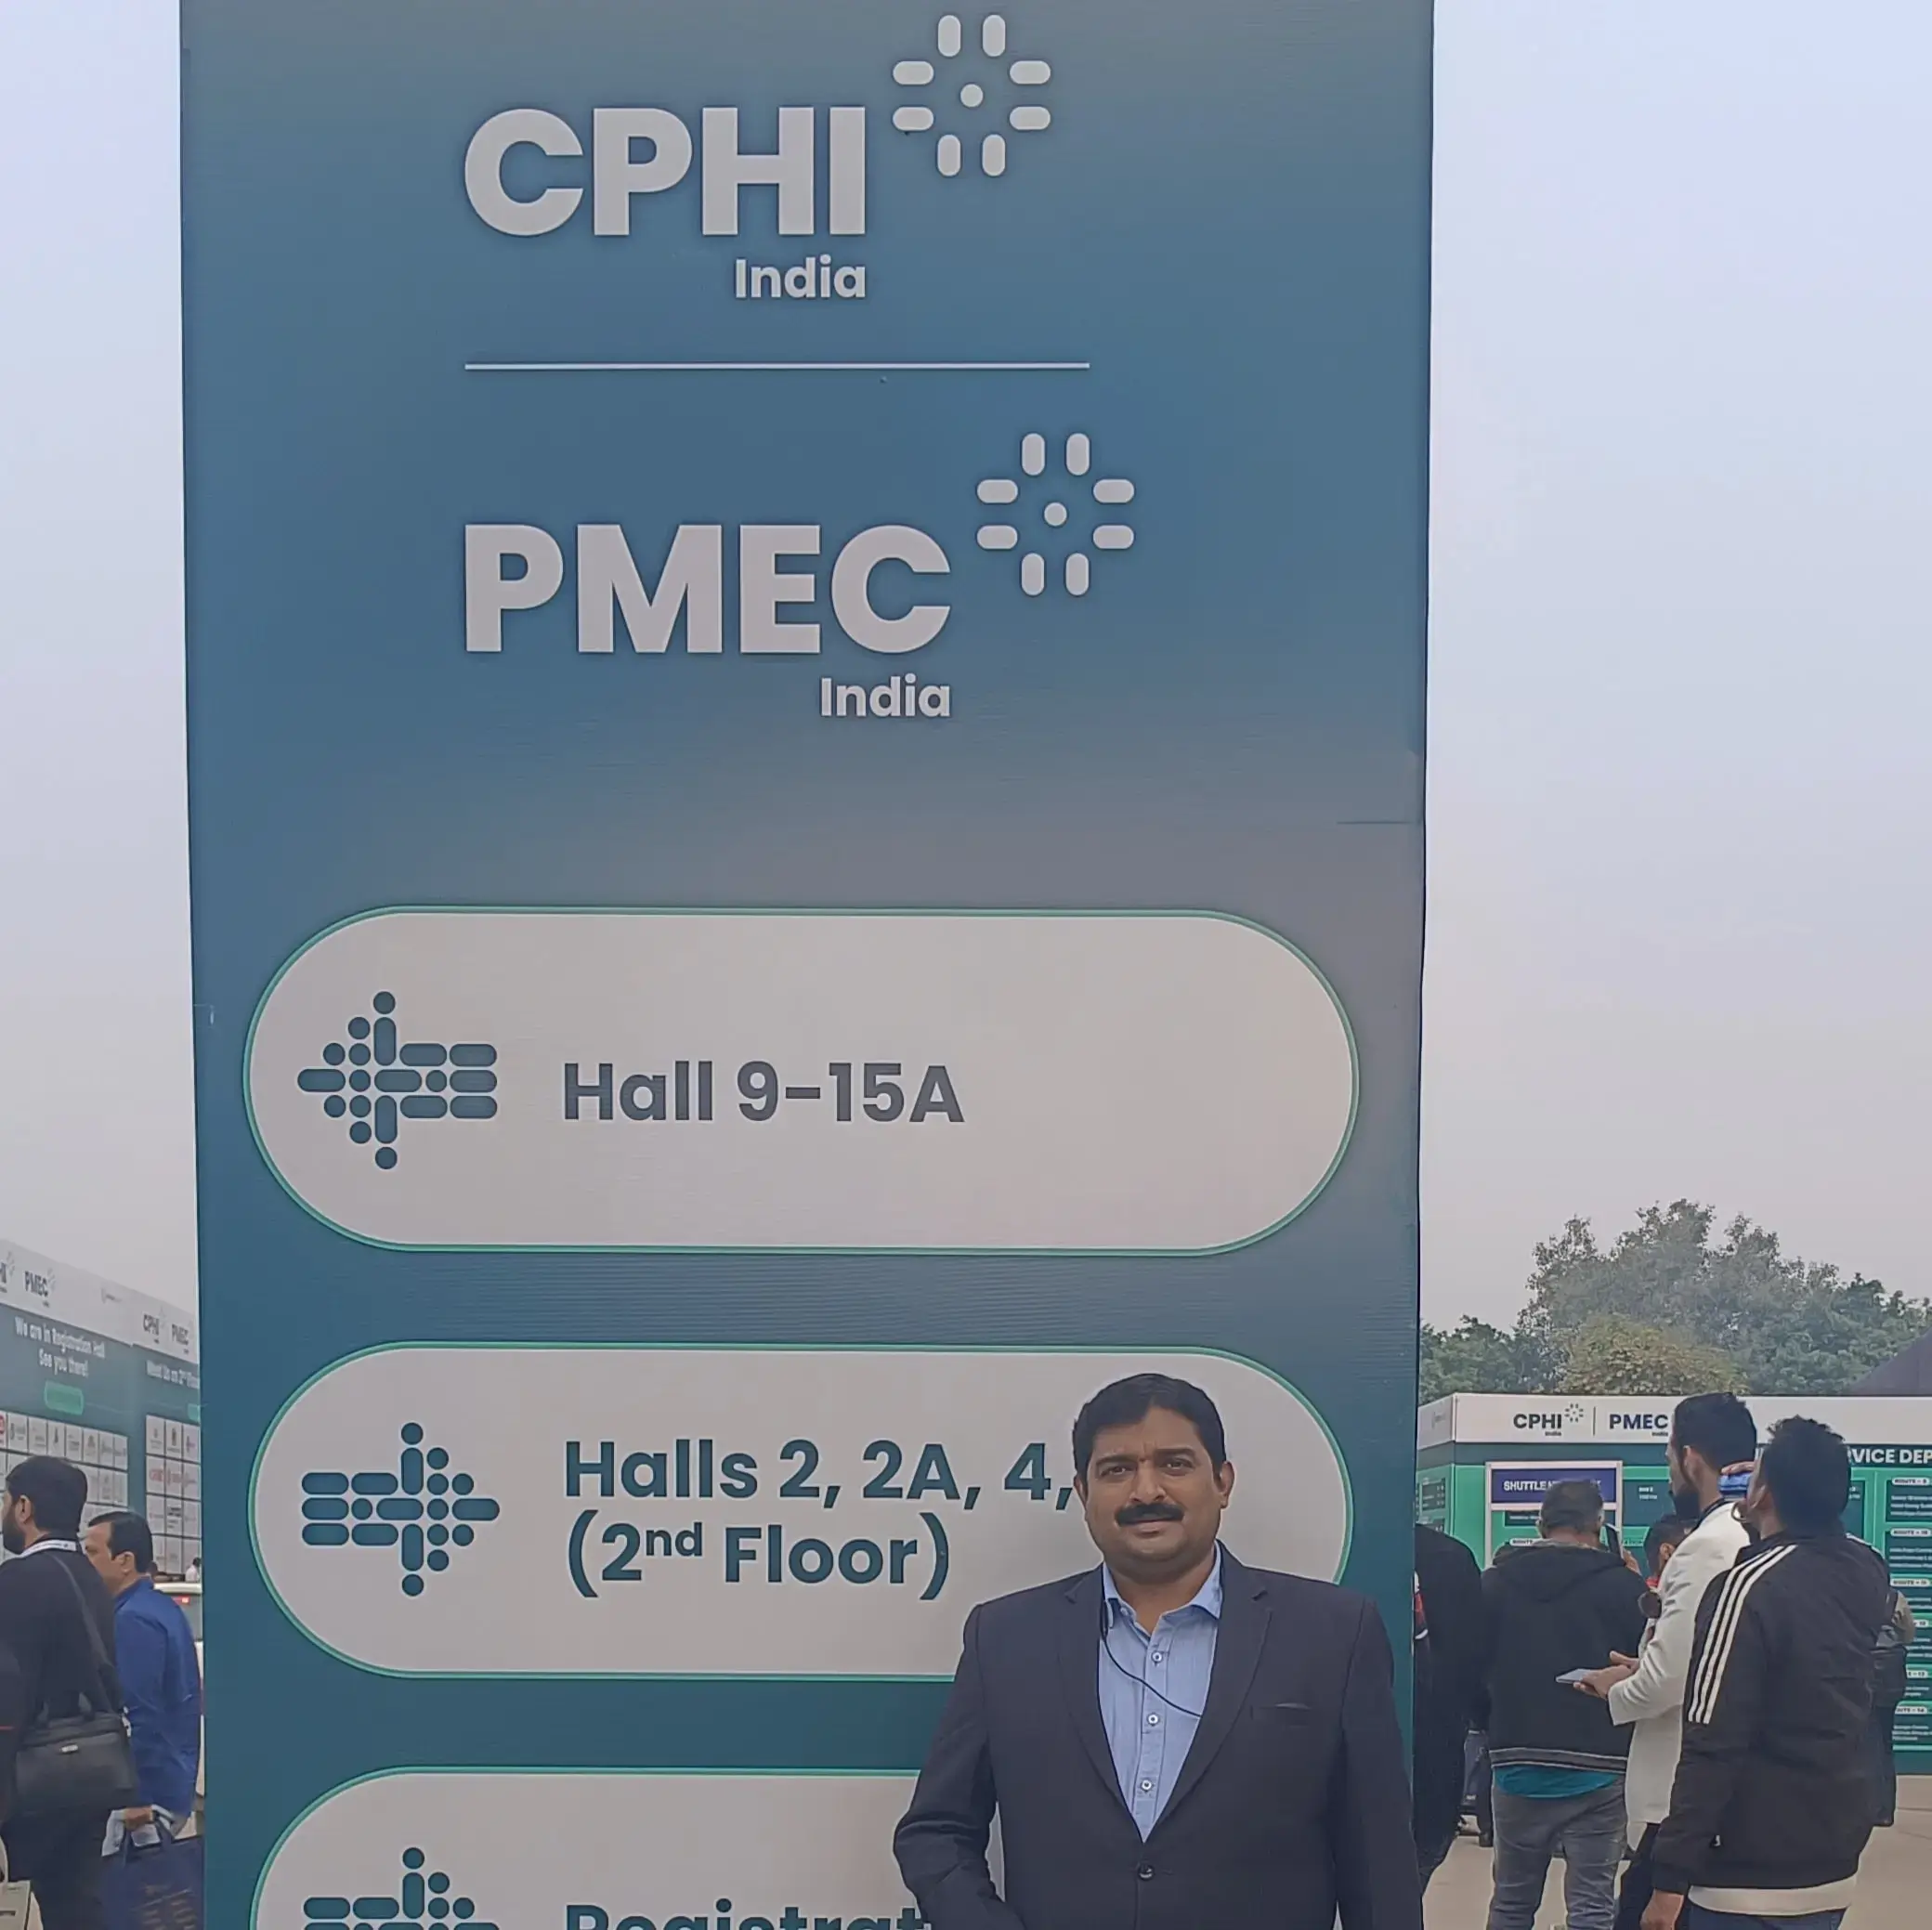 CPHI & PMEC India Expo